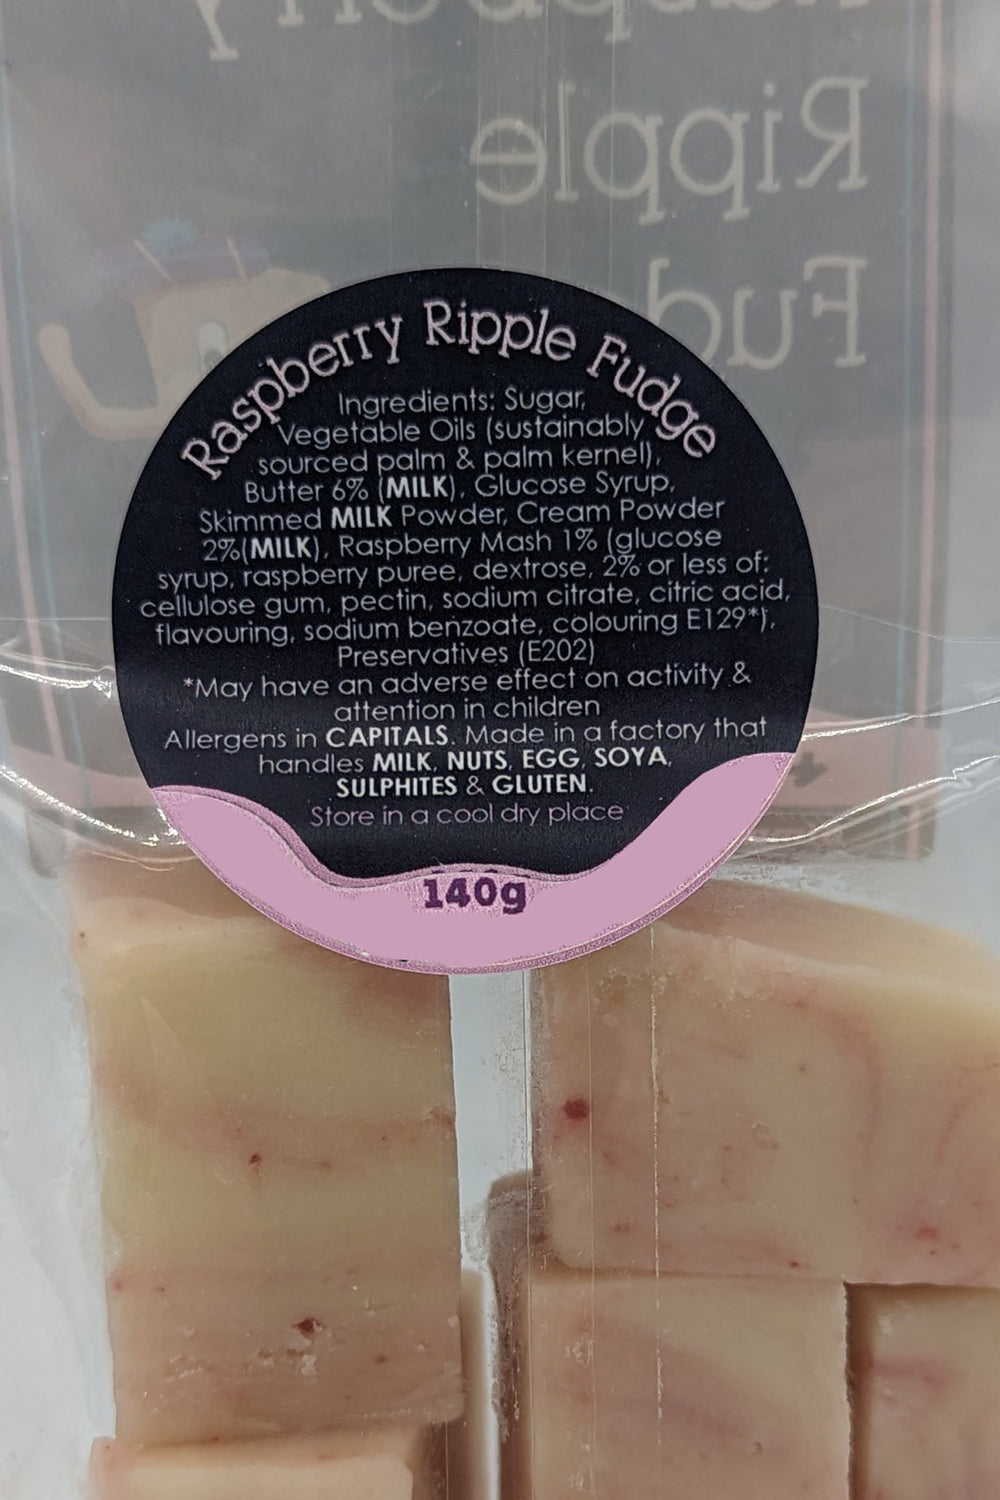 Highland Fudge - Raspberry Ripple